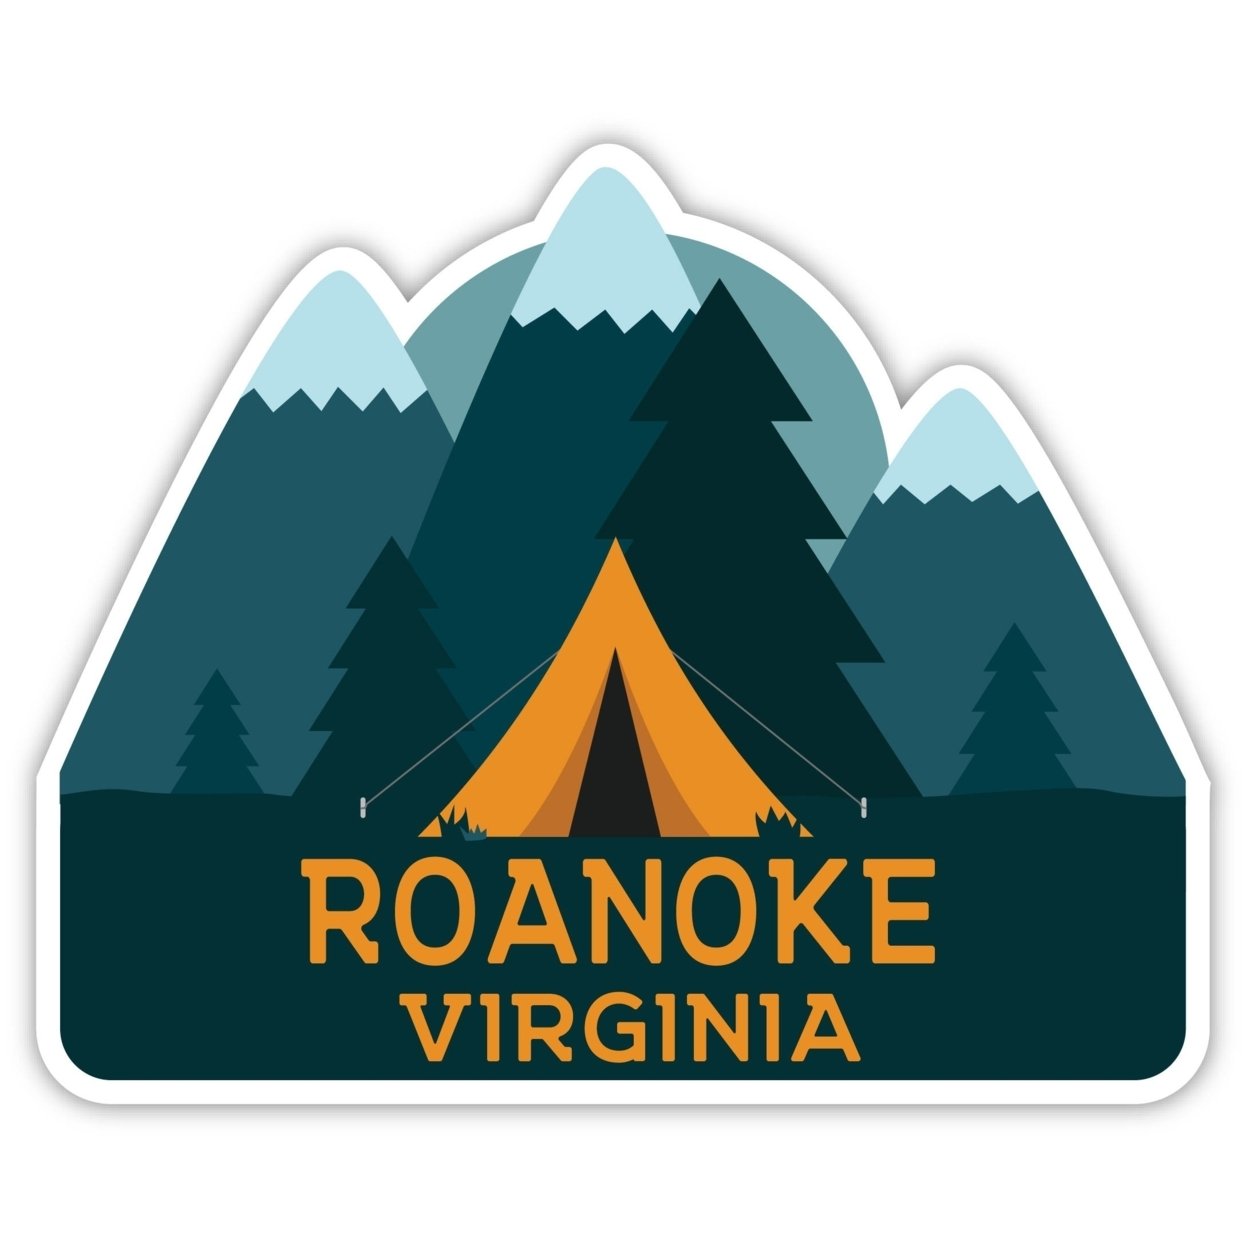 Roanoke Virginia Souvenir Decorative Stickers (Choose Theme And Size) - Single Unit, 2-Inch, Tent